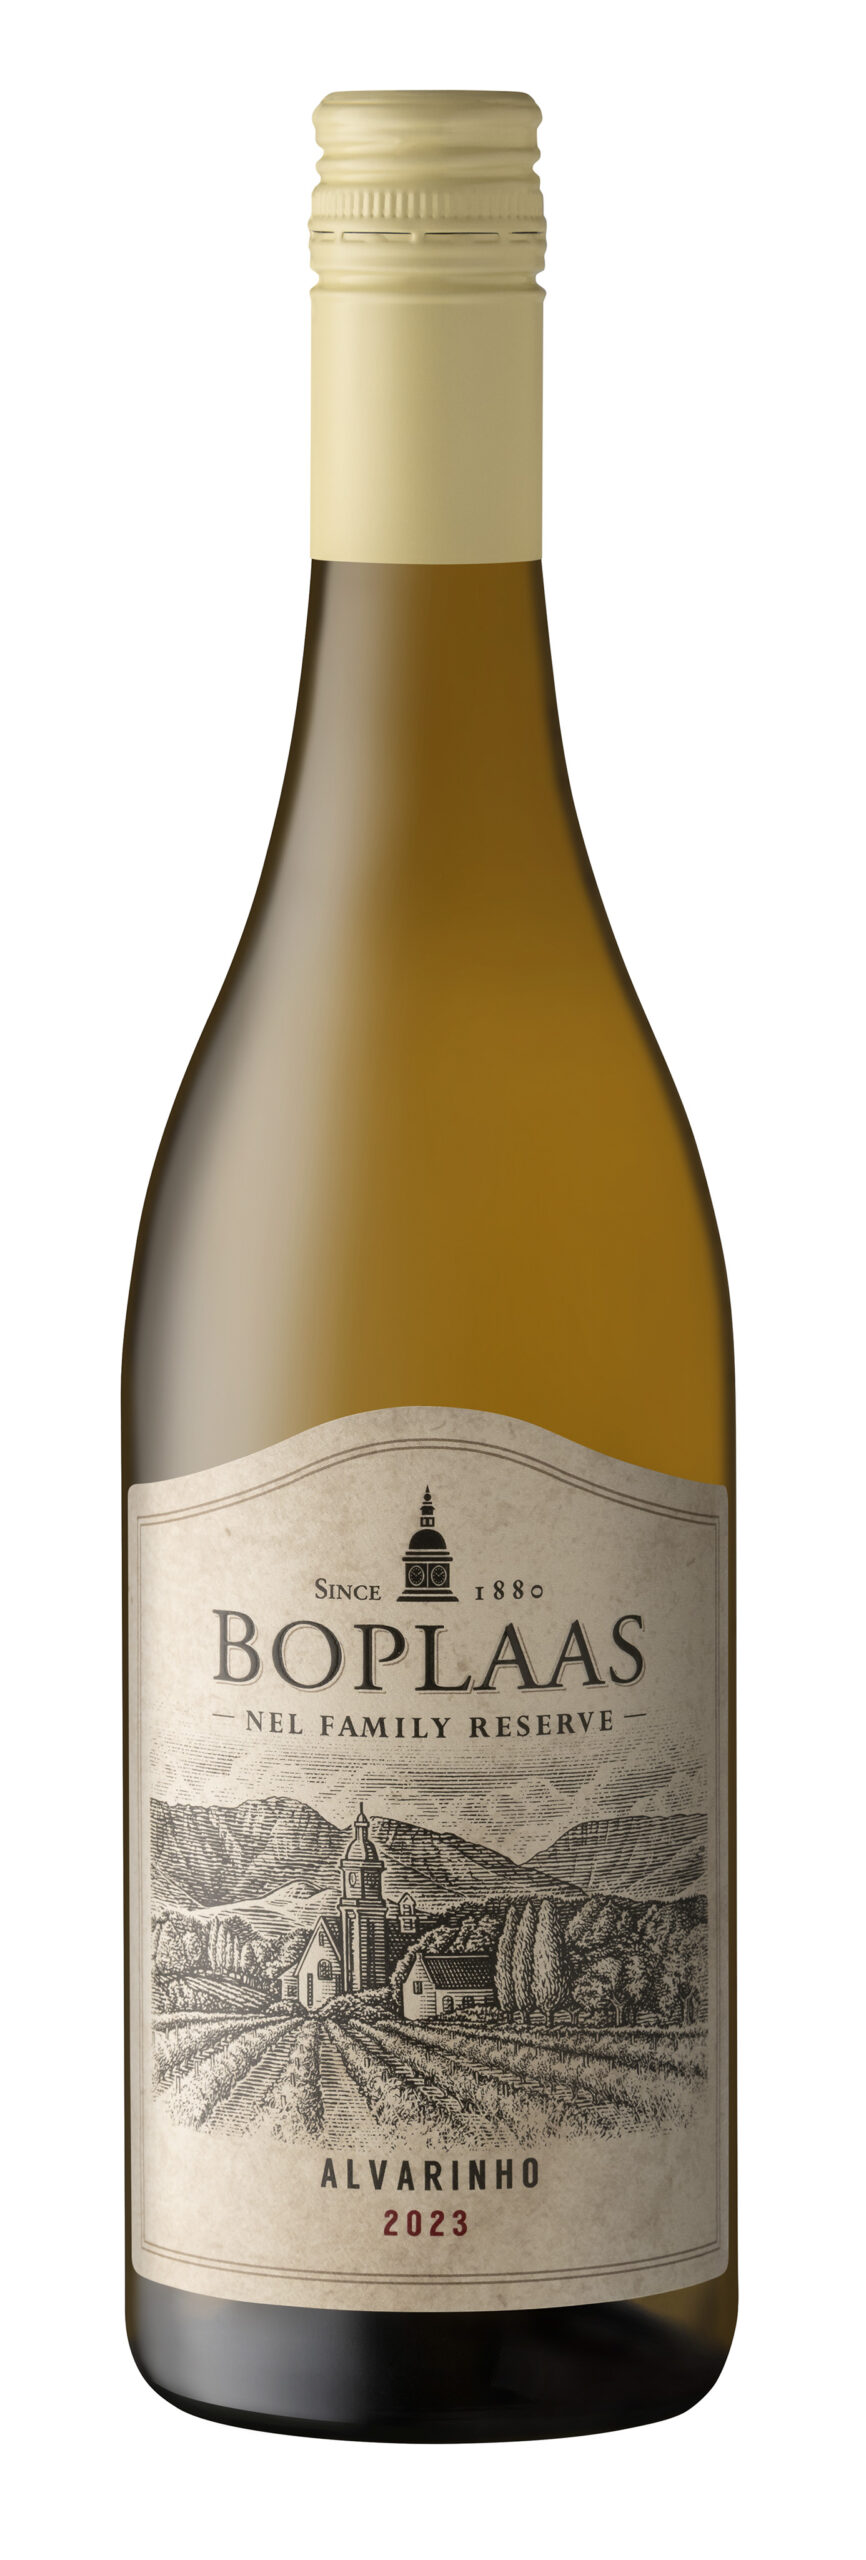 Boplaas’s new Alvarinho named overall best at wine challenge photo